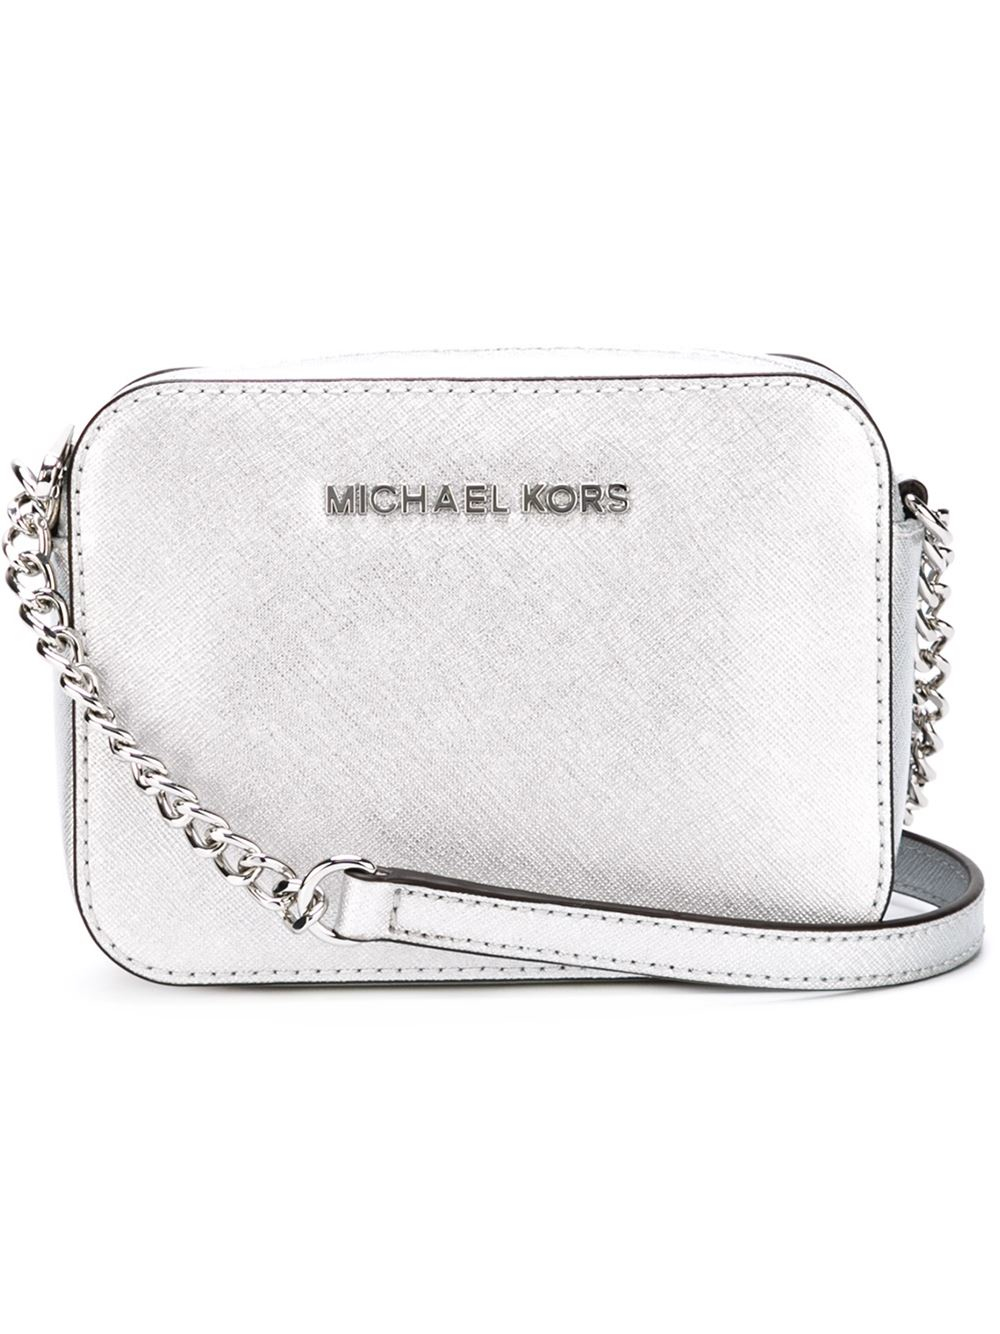 michael kors silver metallic purse